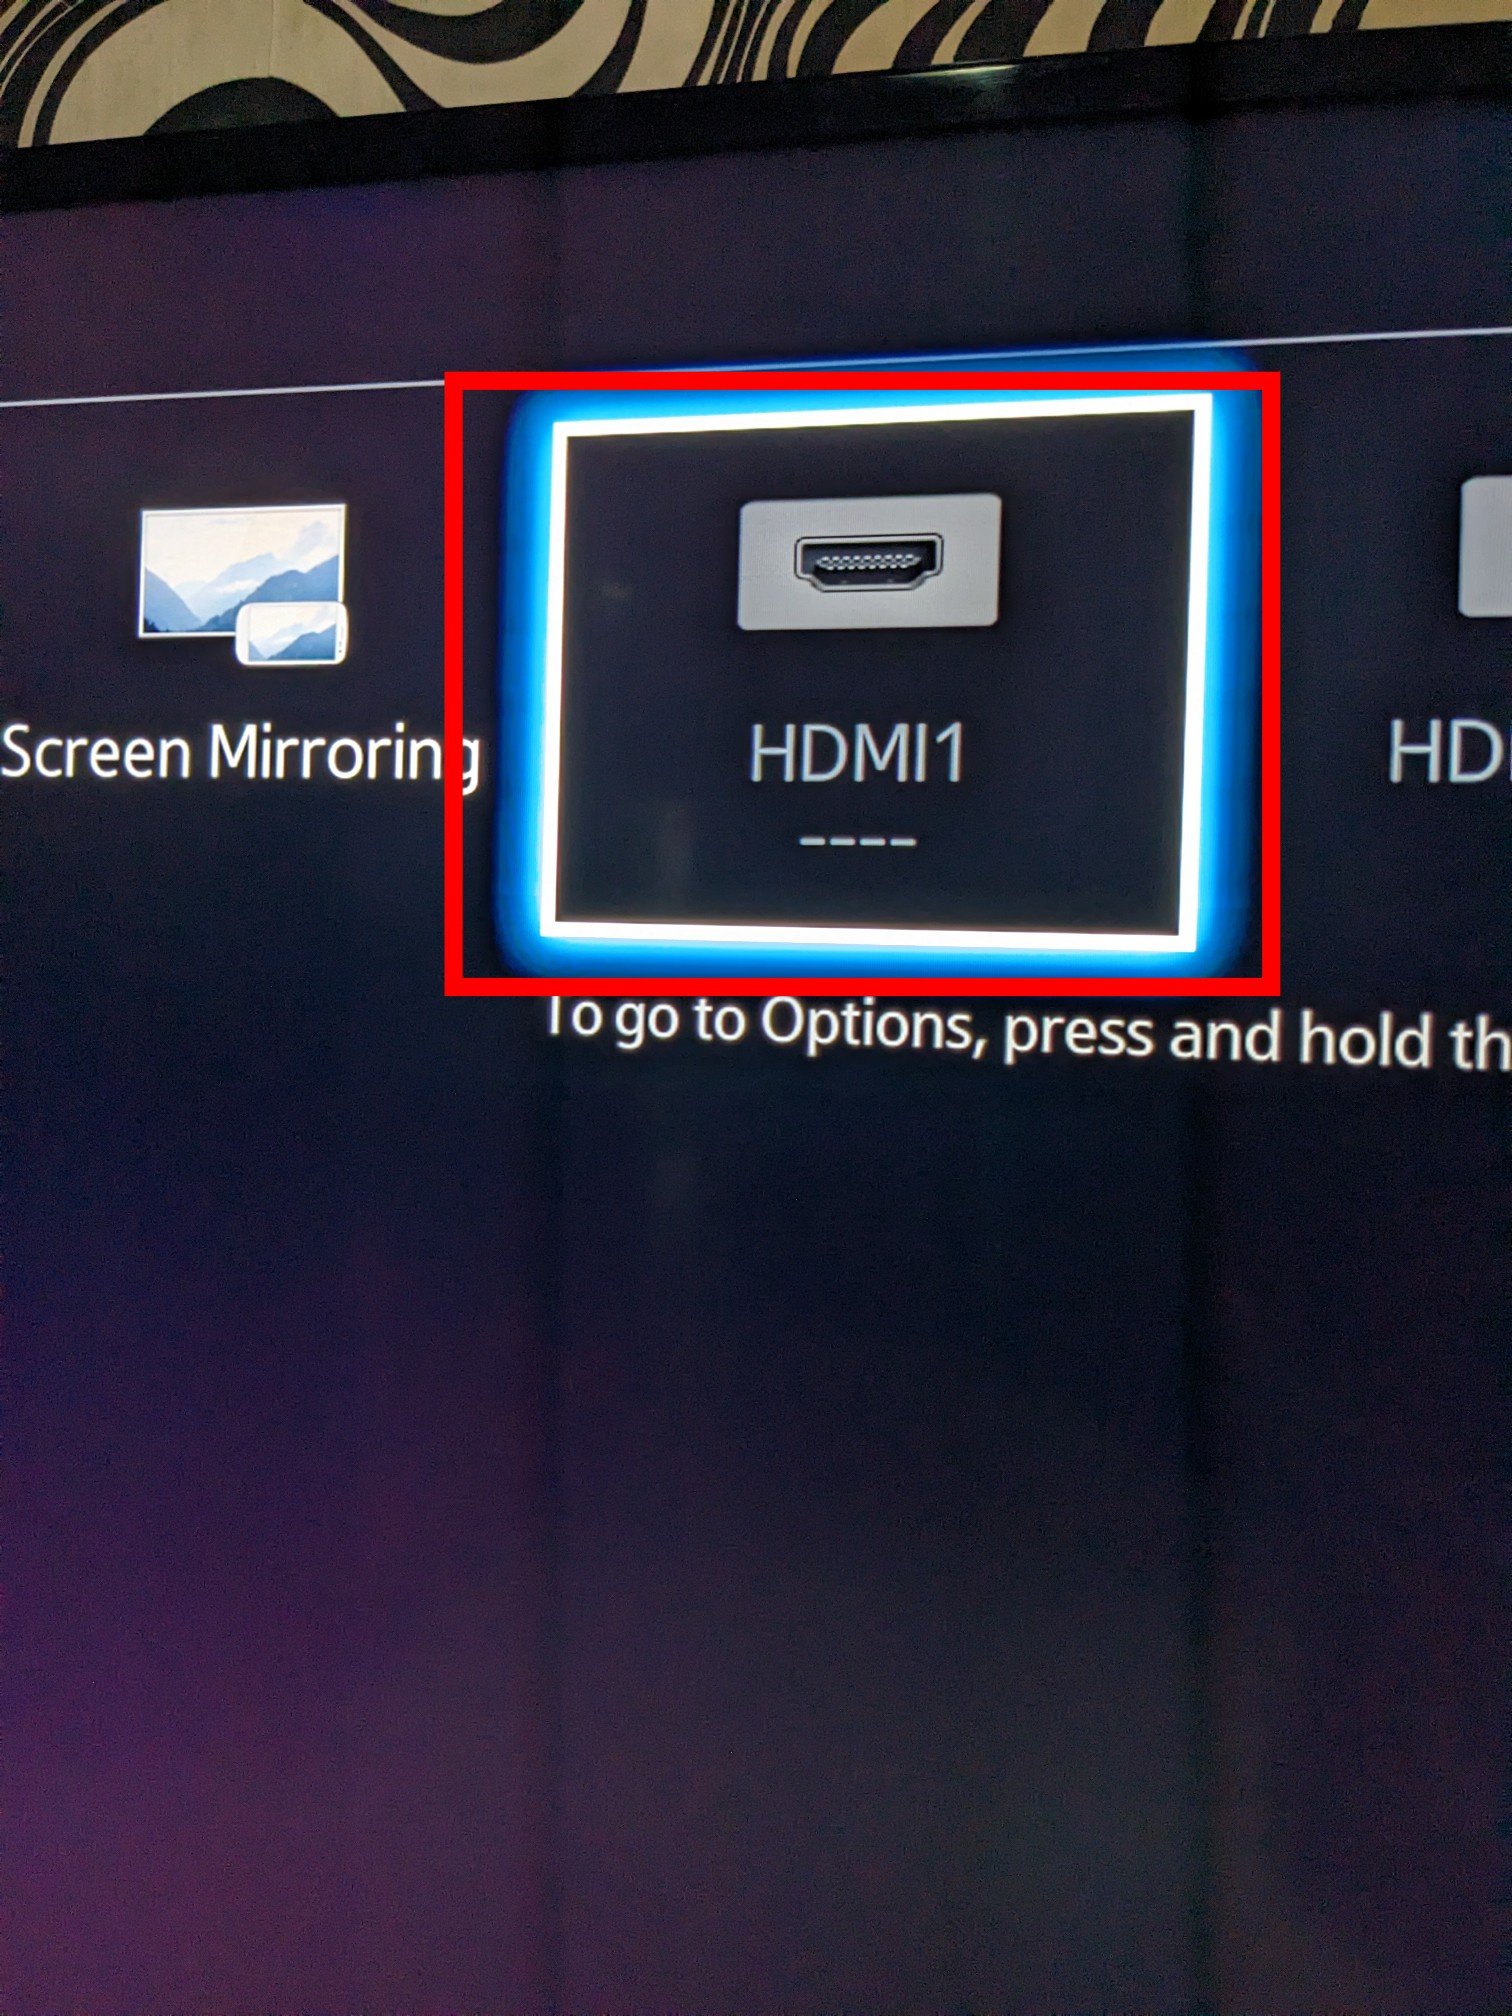 HDMI 1 on Samsung smart TV 